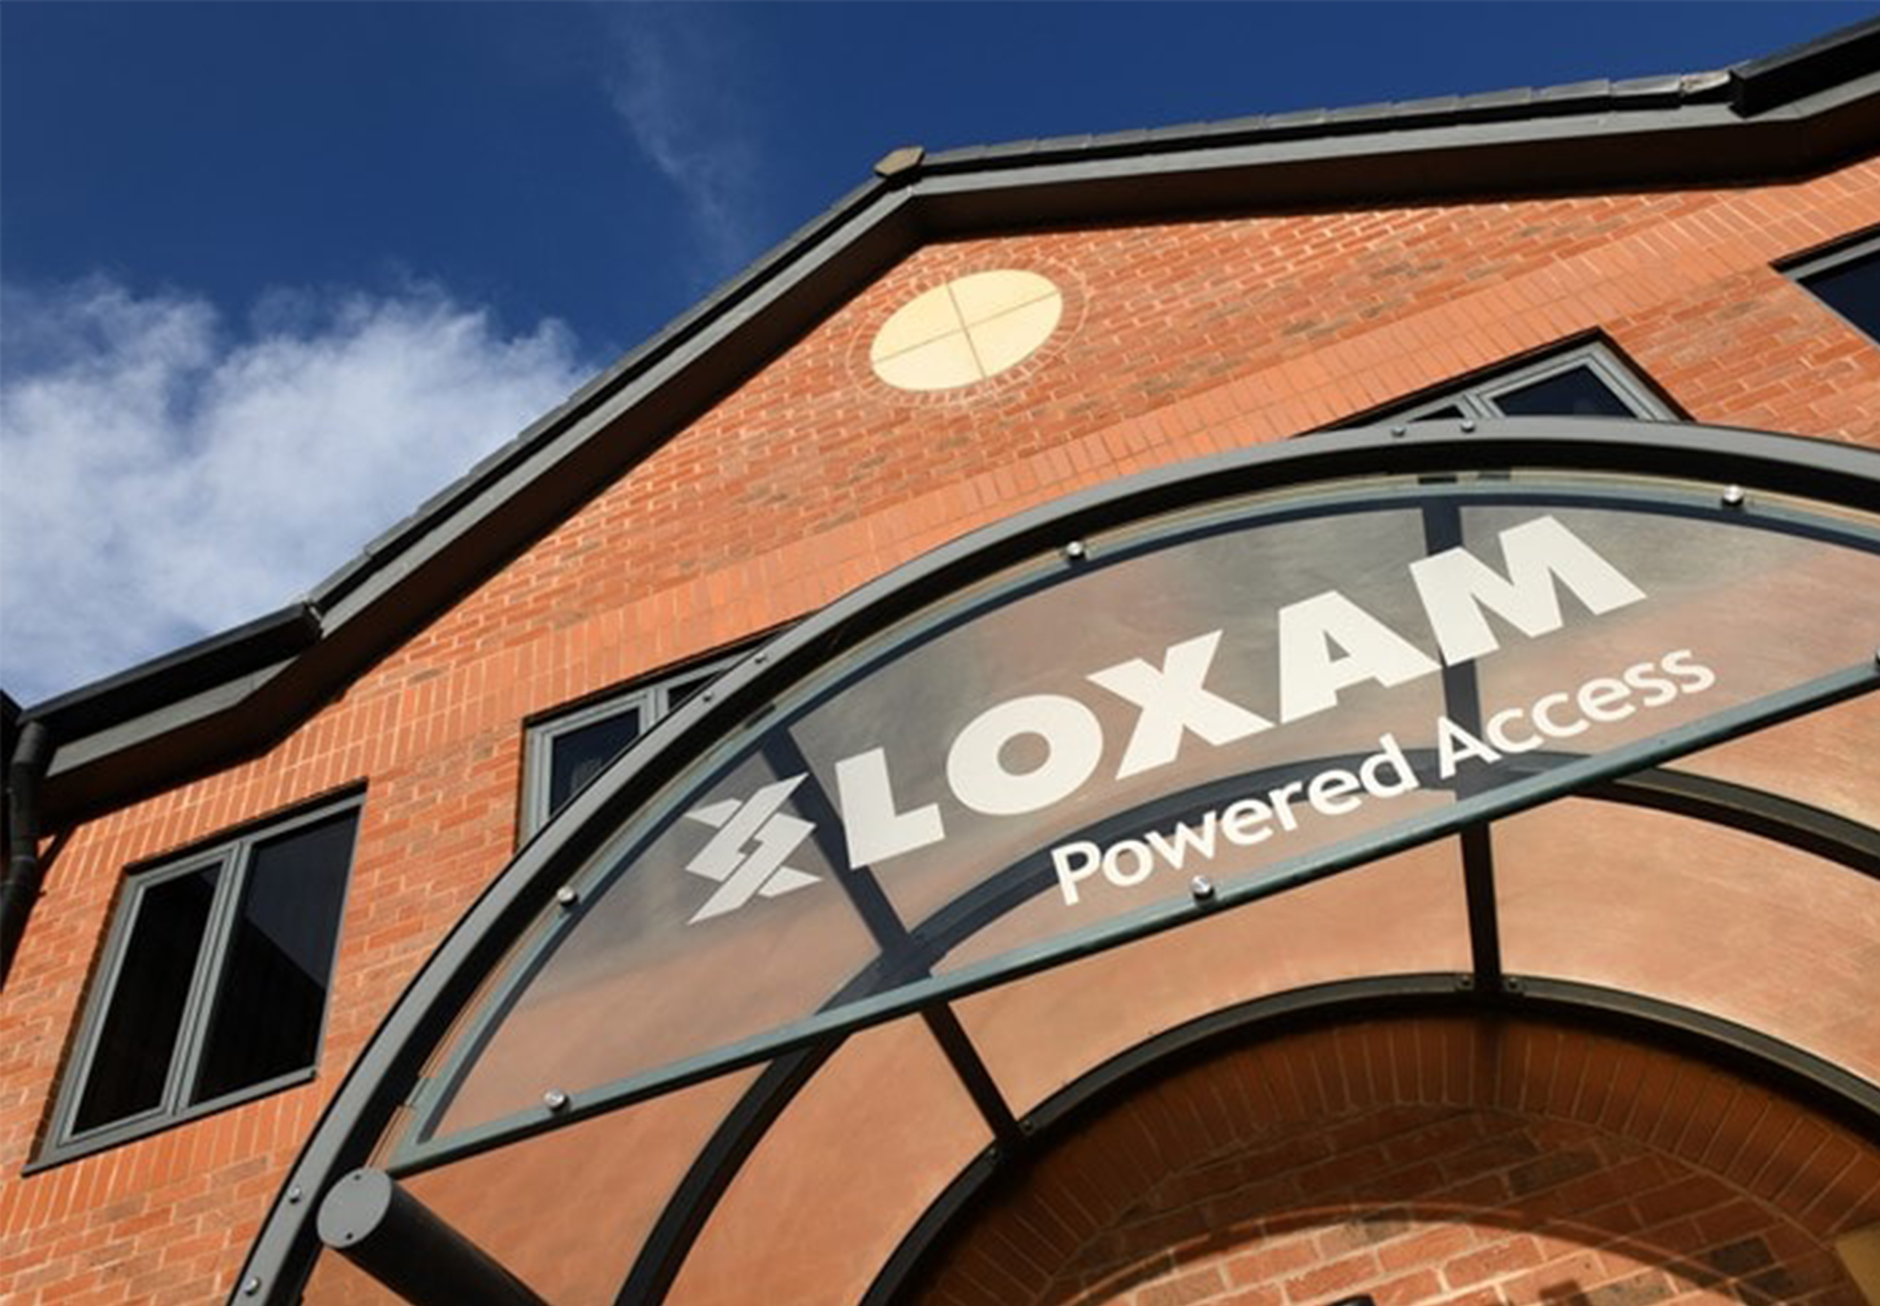 Rapid Access is a subsidiary of Loxam Group